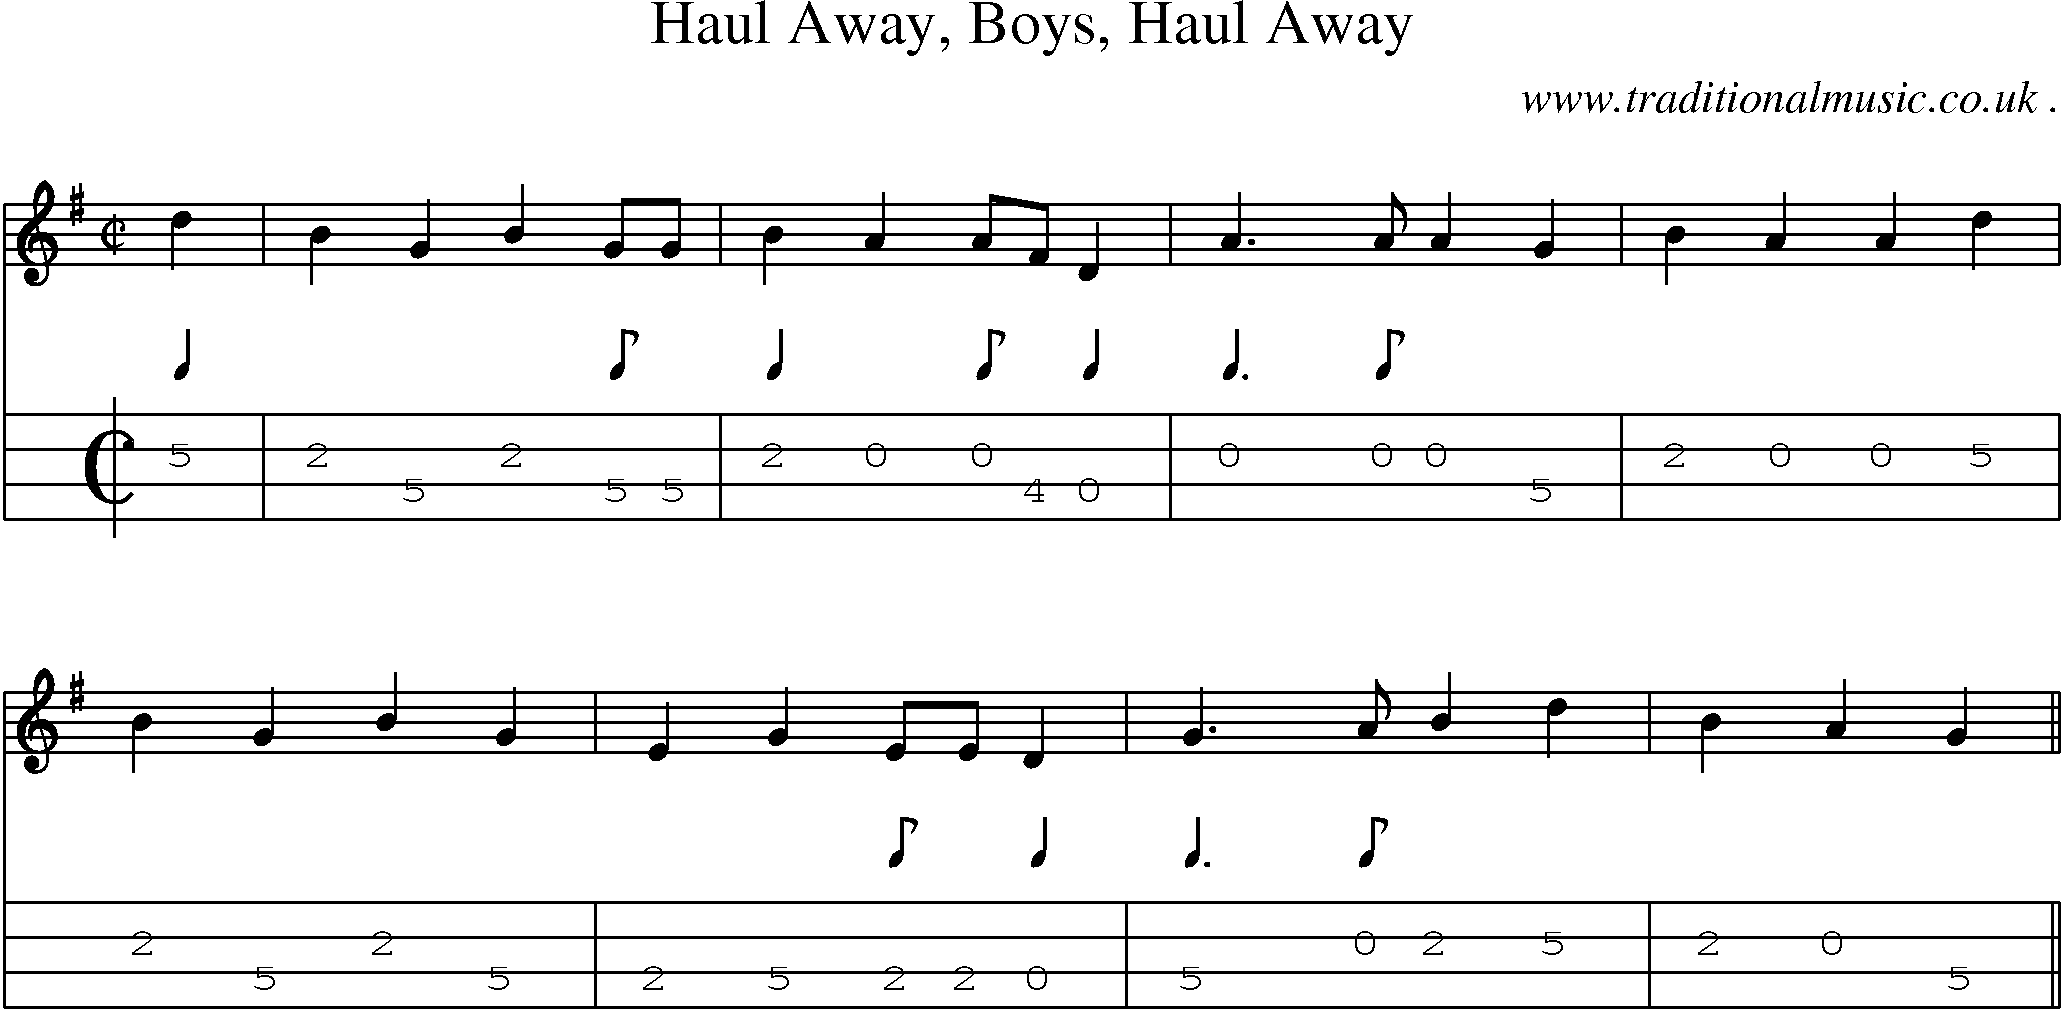 Sheet-Music and Mandolin Tabs for Haul Away Boys Haul Away